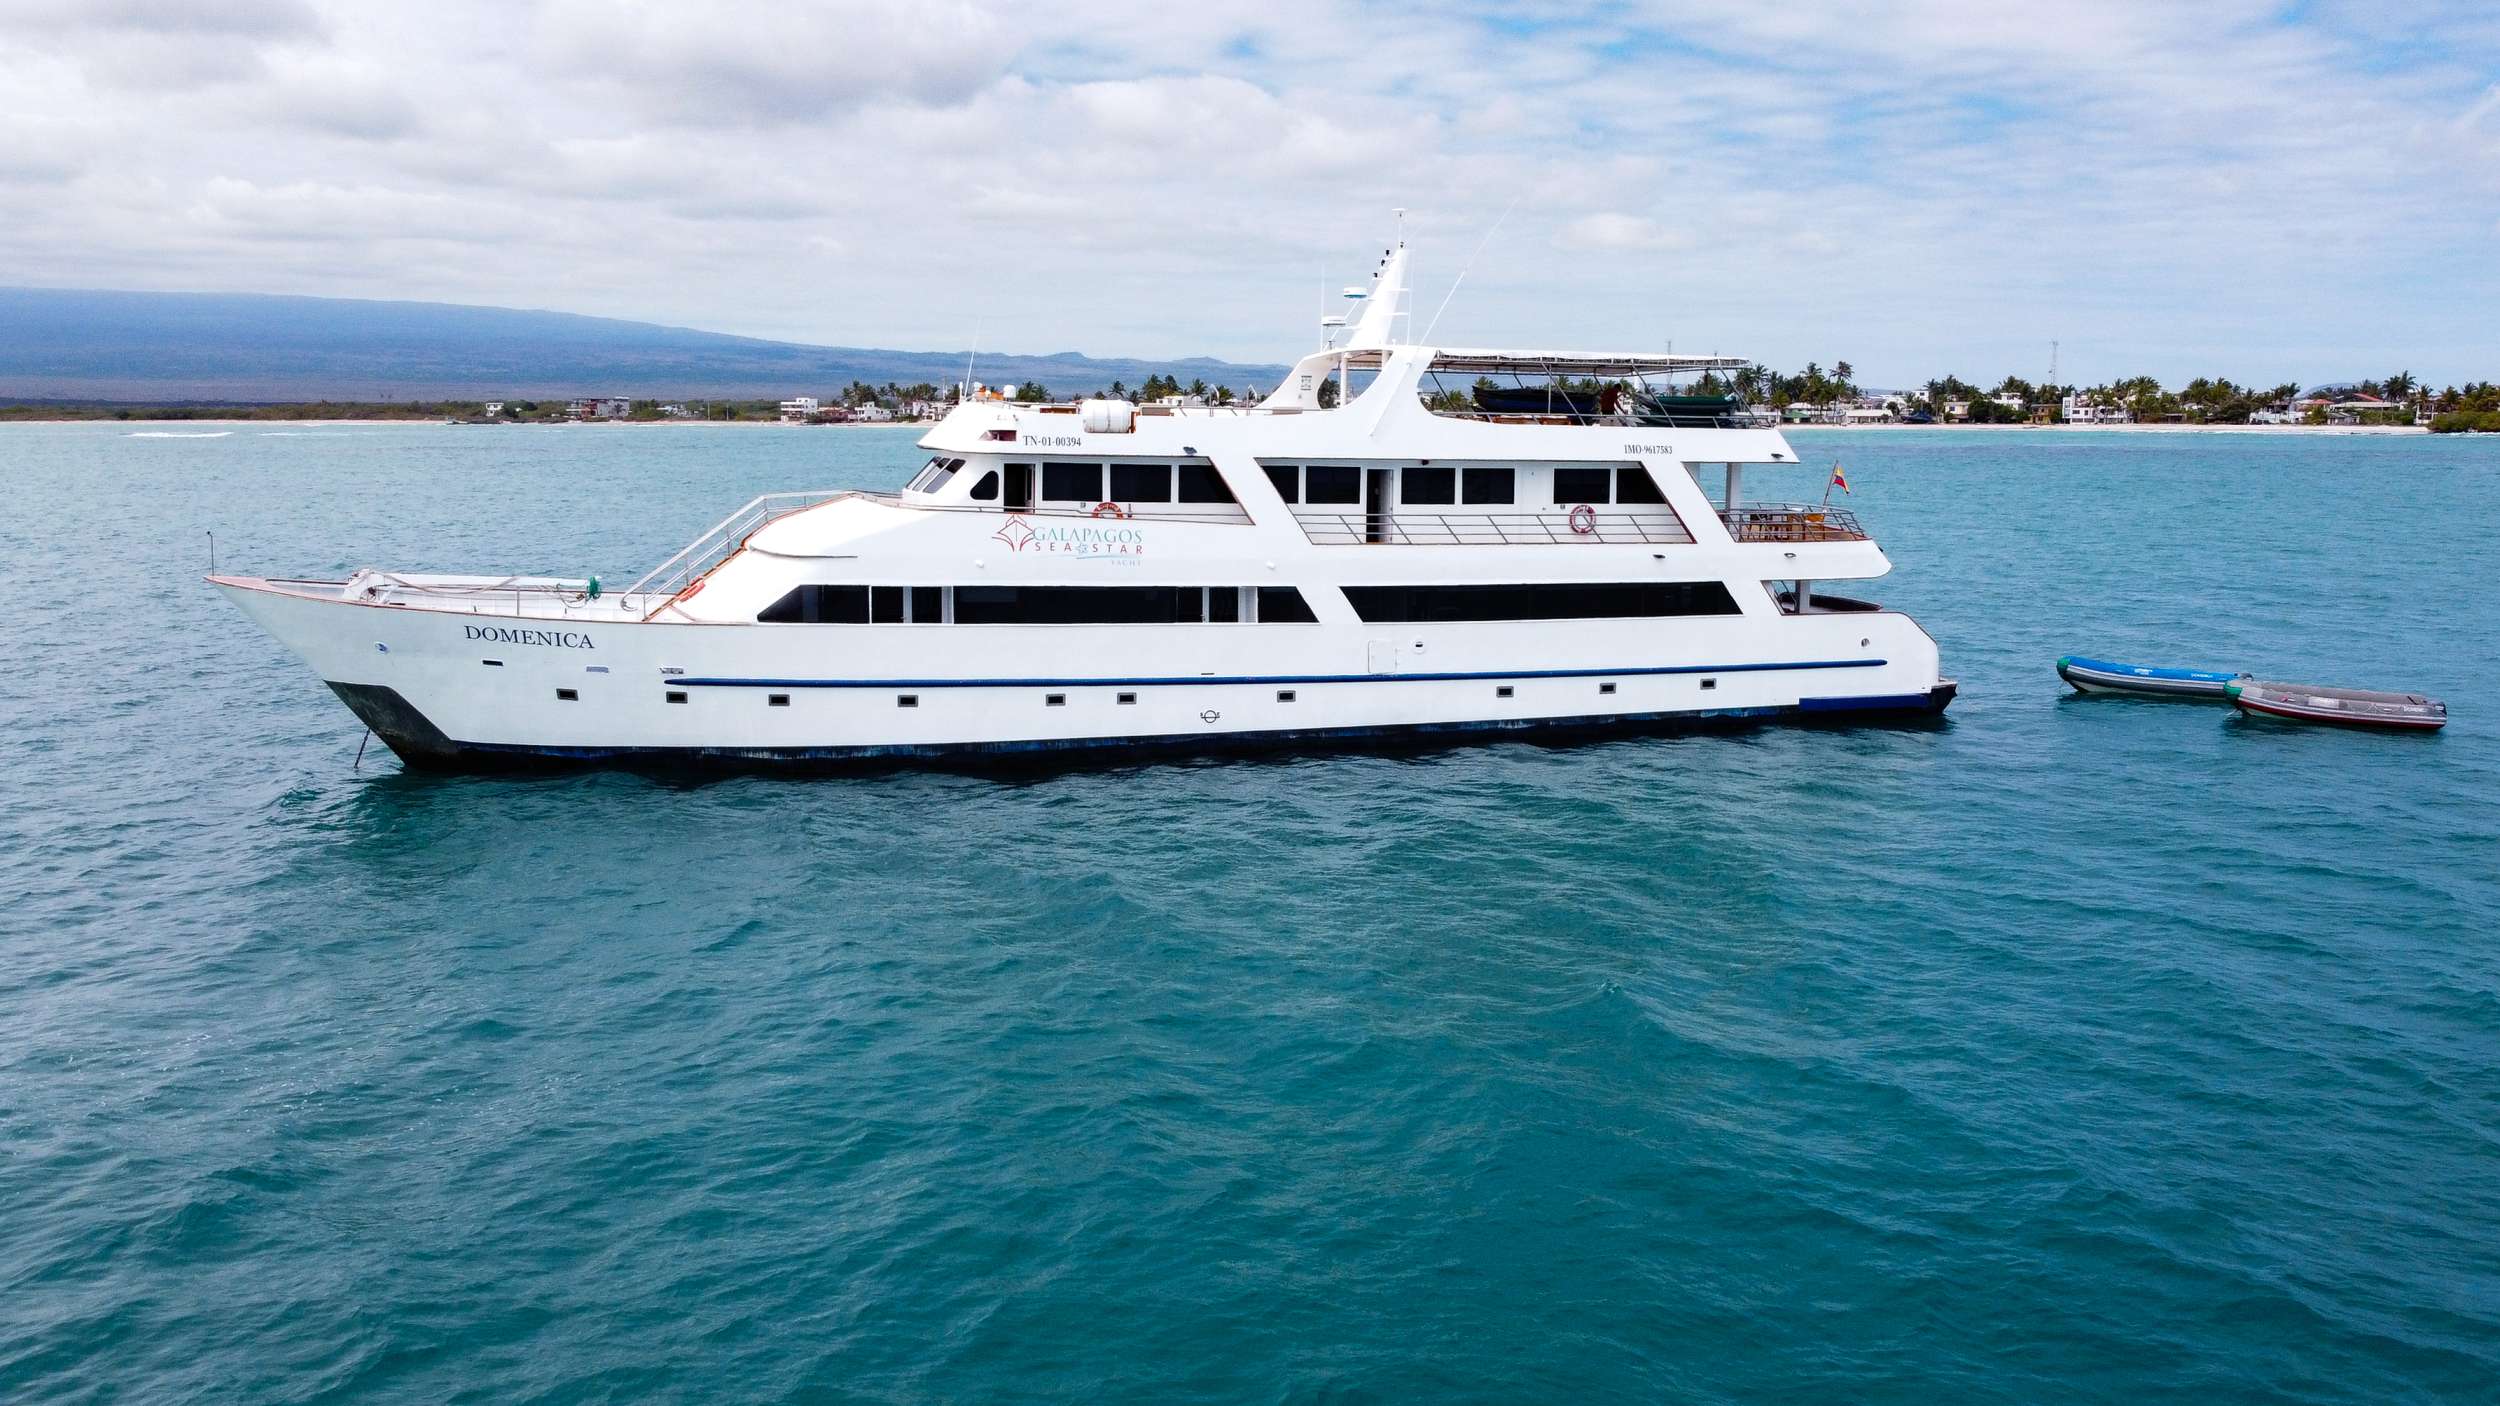 Galapagos Sea Star Yacht Image 1/19